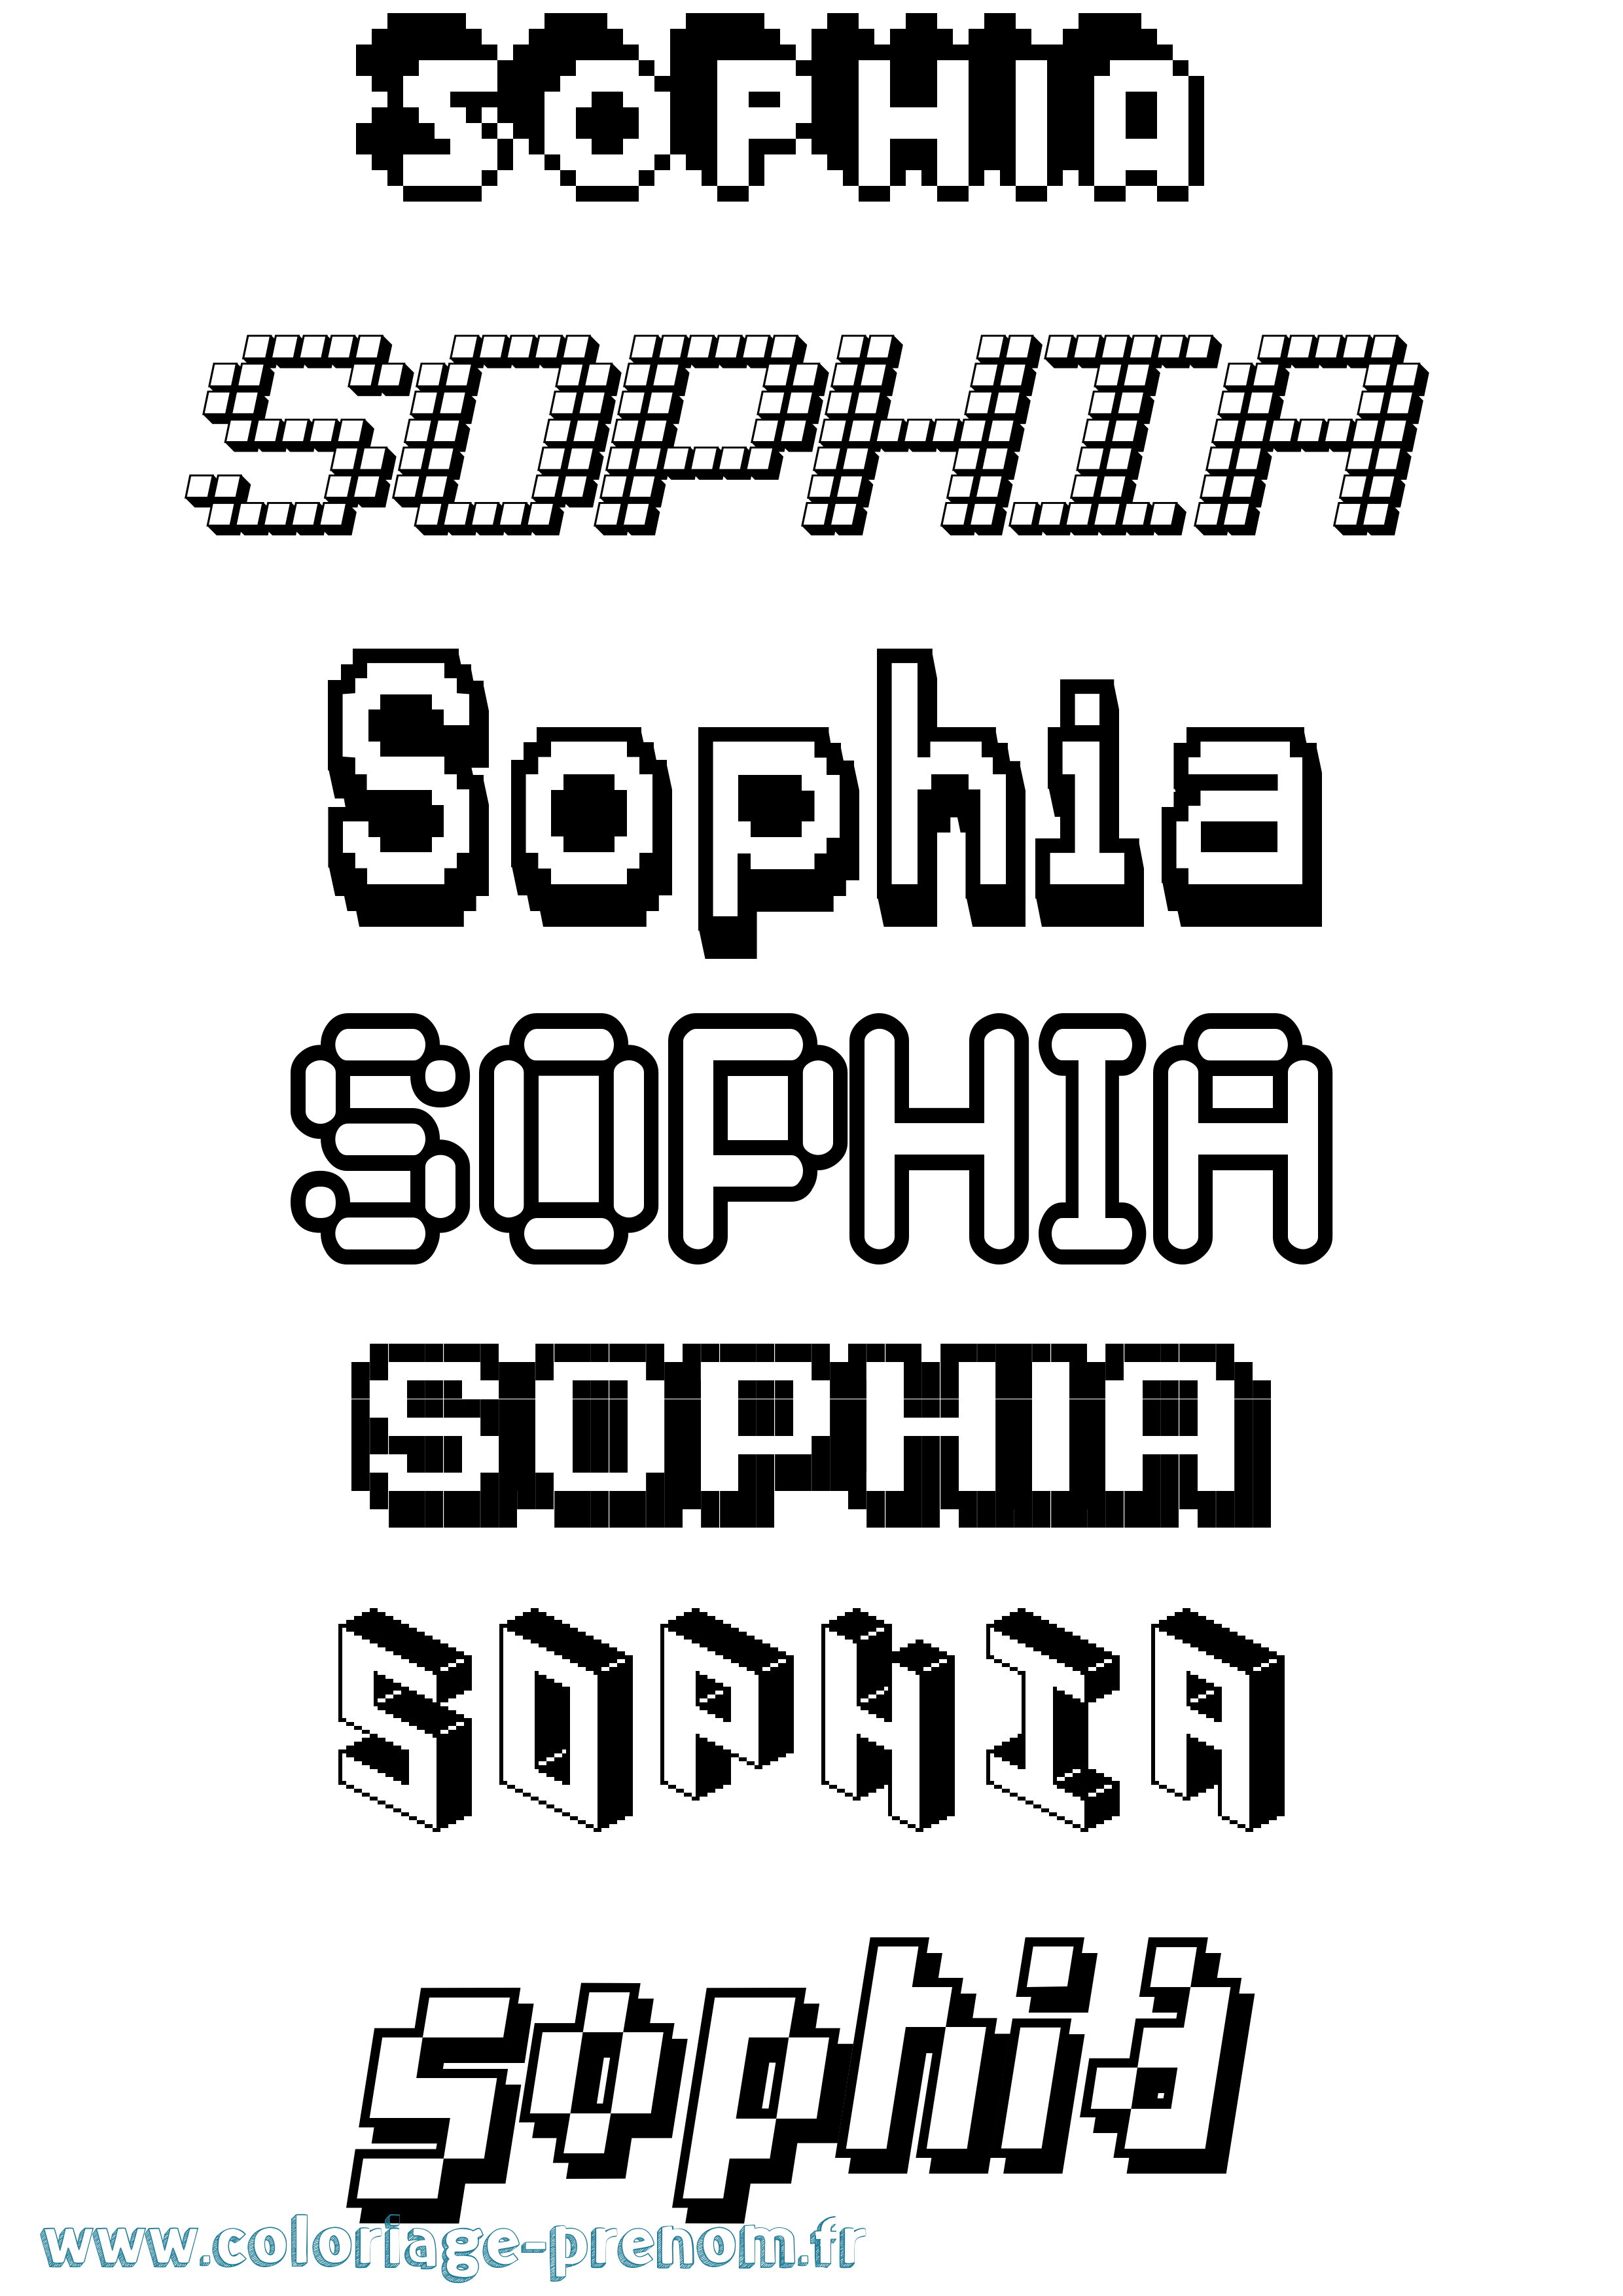 Coloriage prénom Sophia Pixel